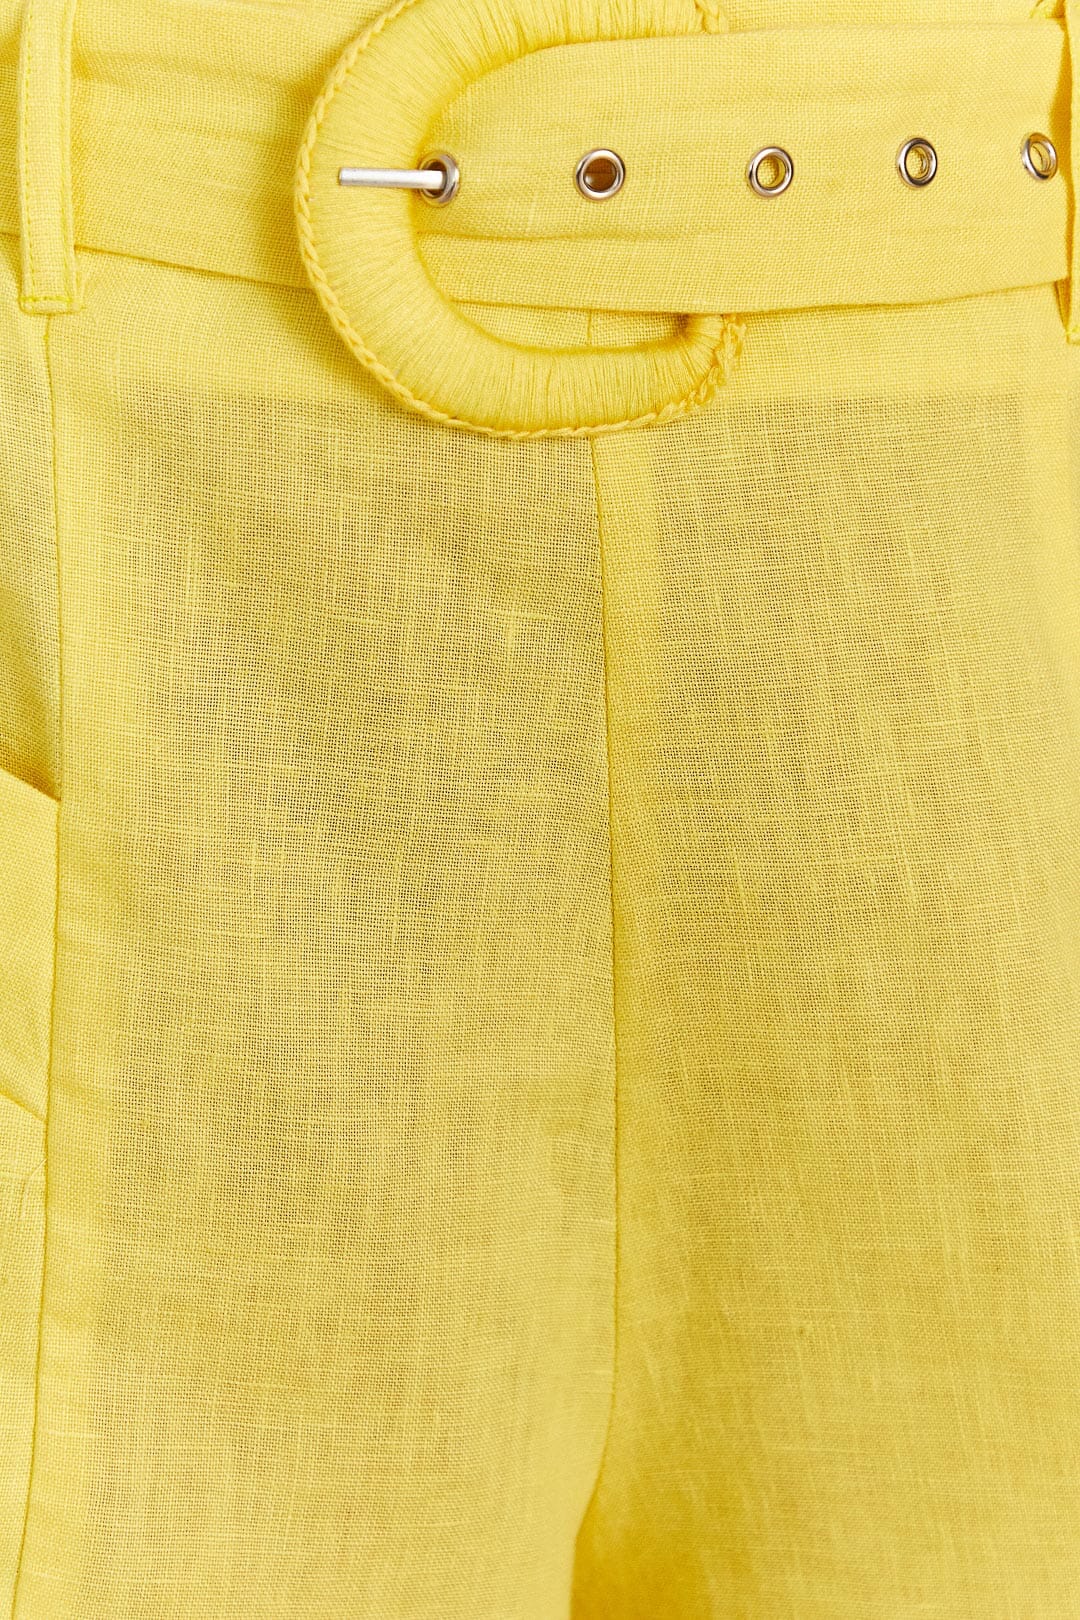 Bright Yellow Shorts